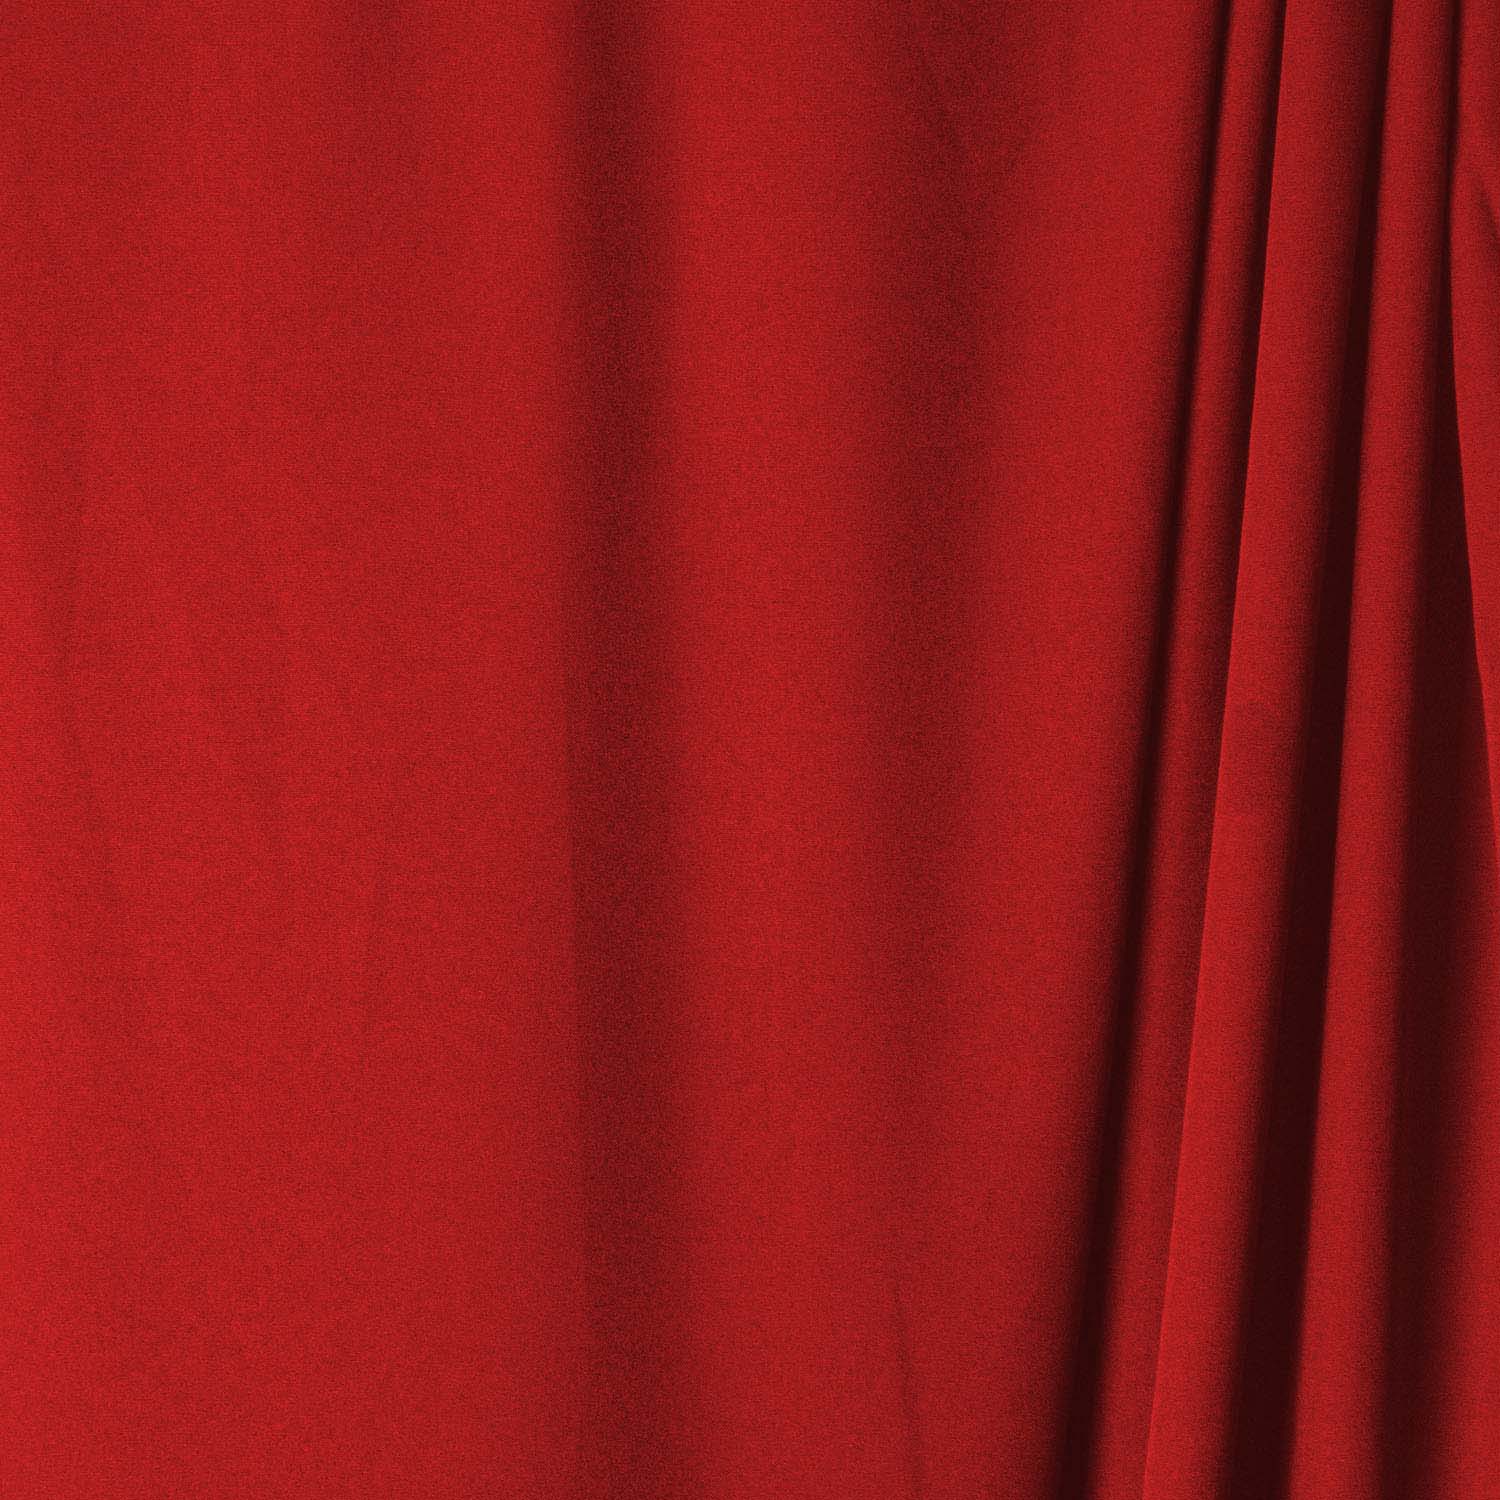 red wrinkle resistant backdrops